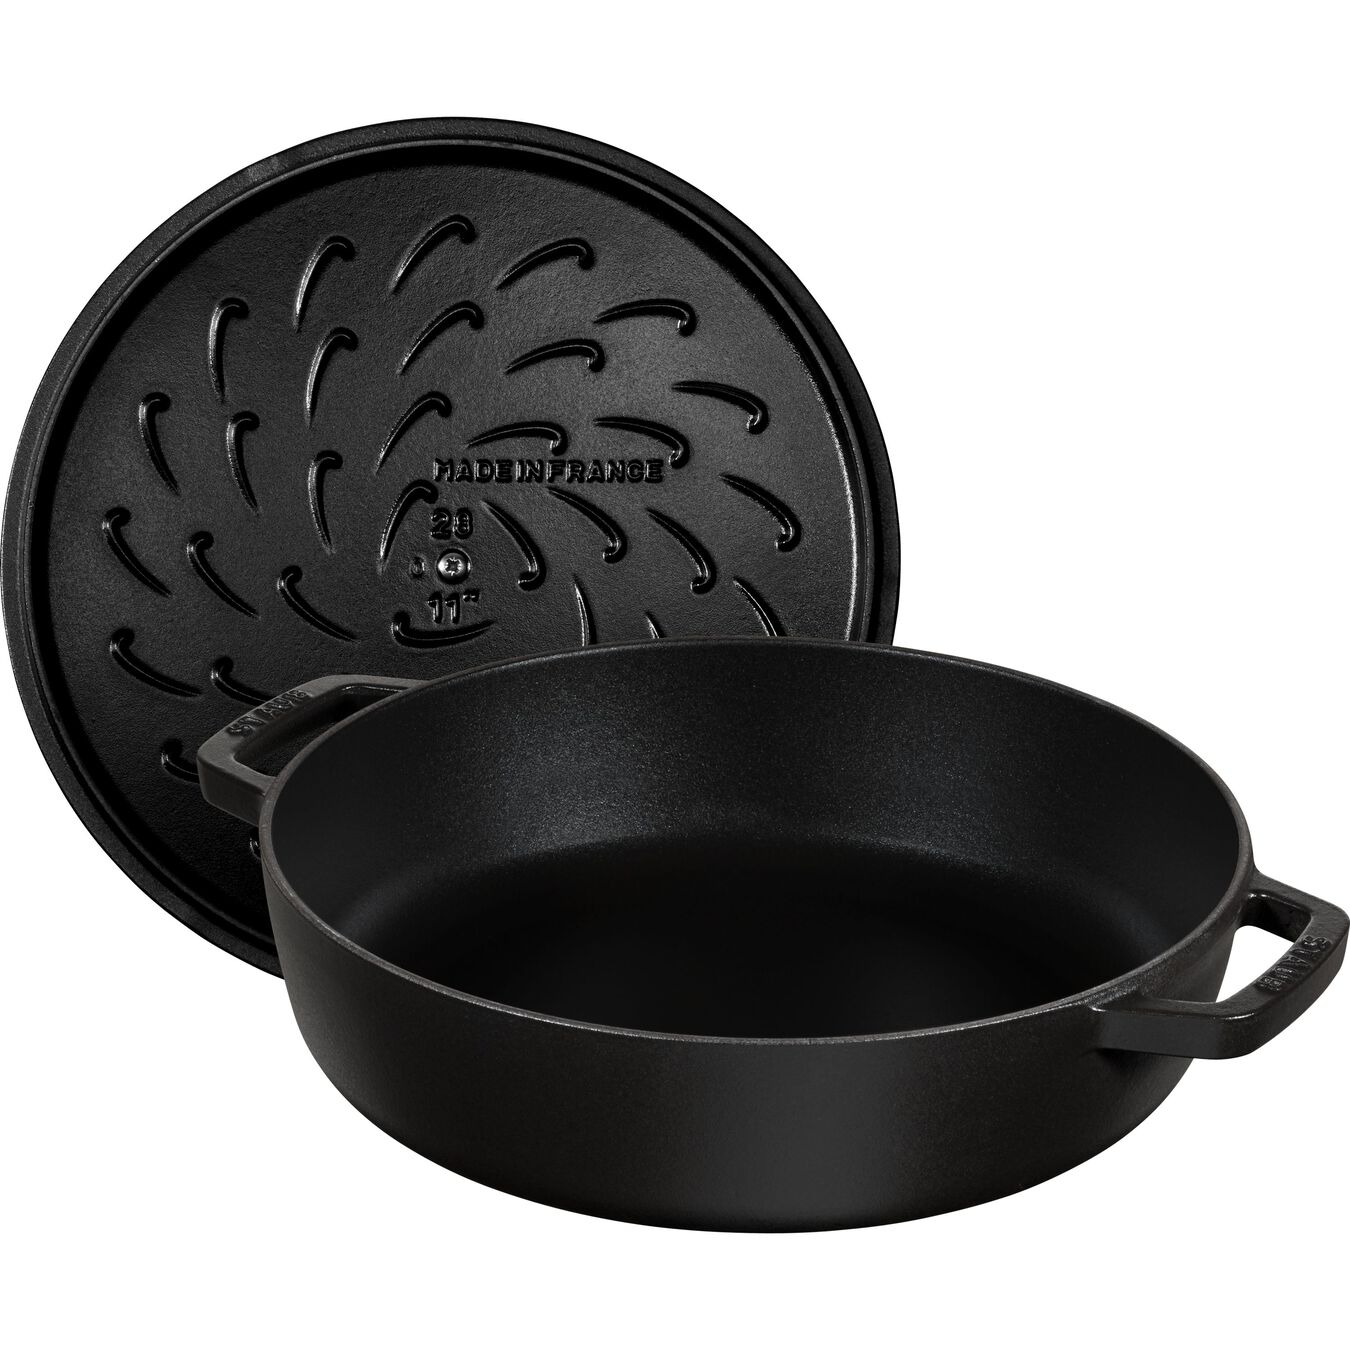 24 cm round Cast iron Saute pan Chistera black,,large 6